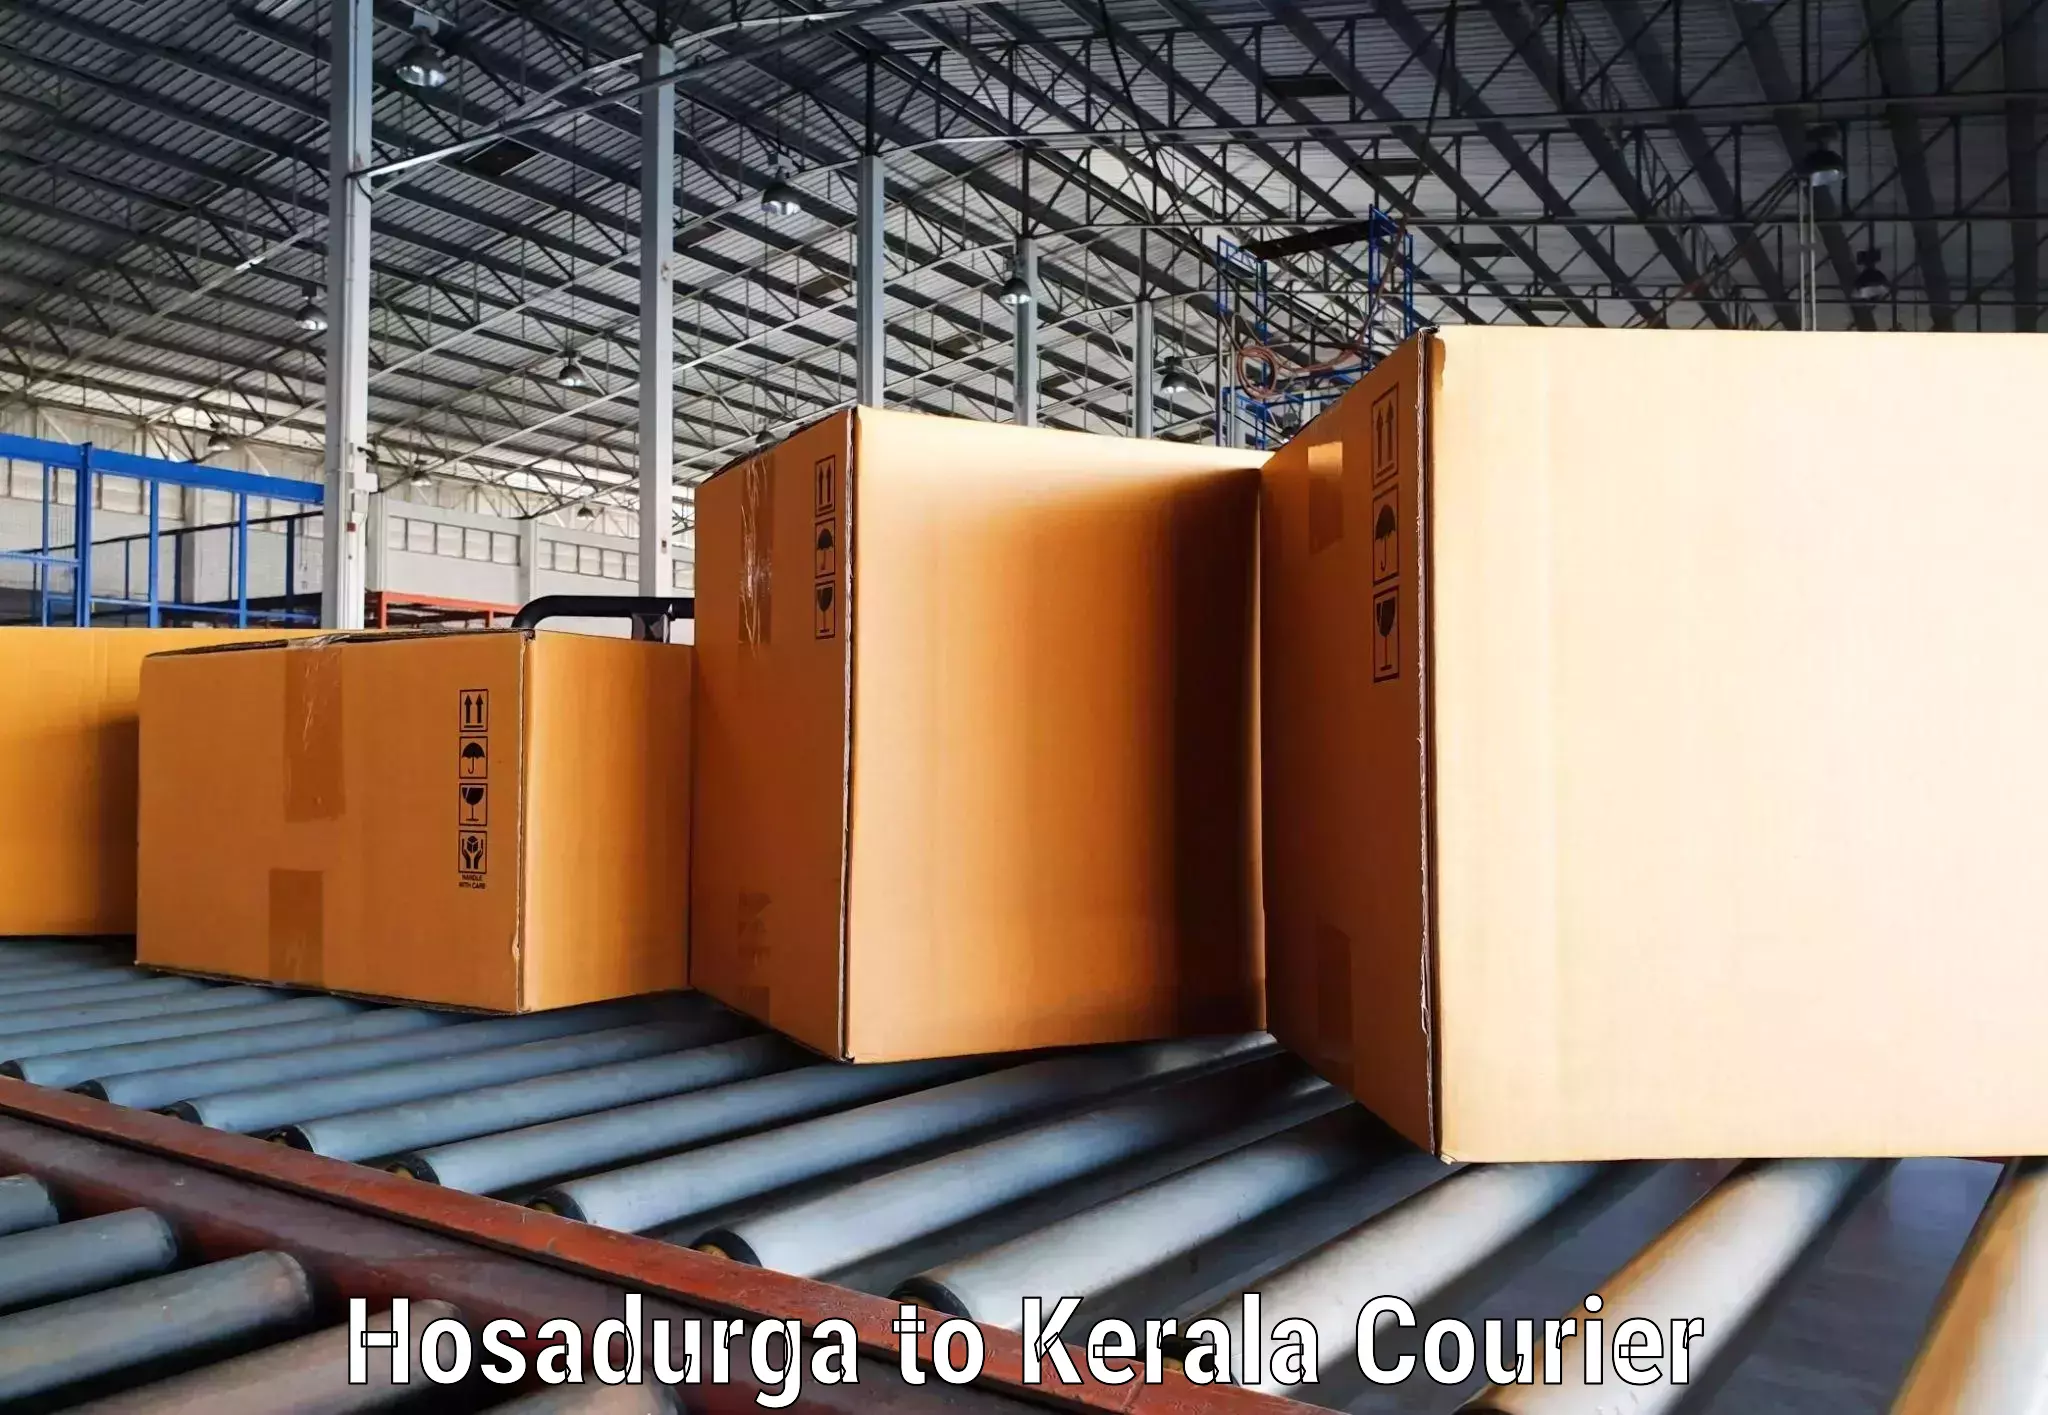 State-of-the-art courier technology Hosadurga to Calicut